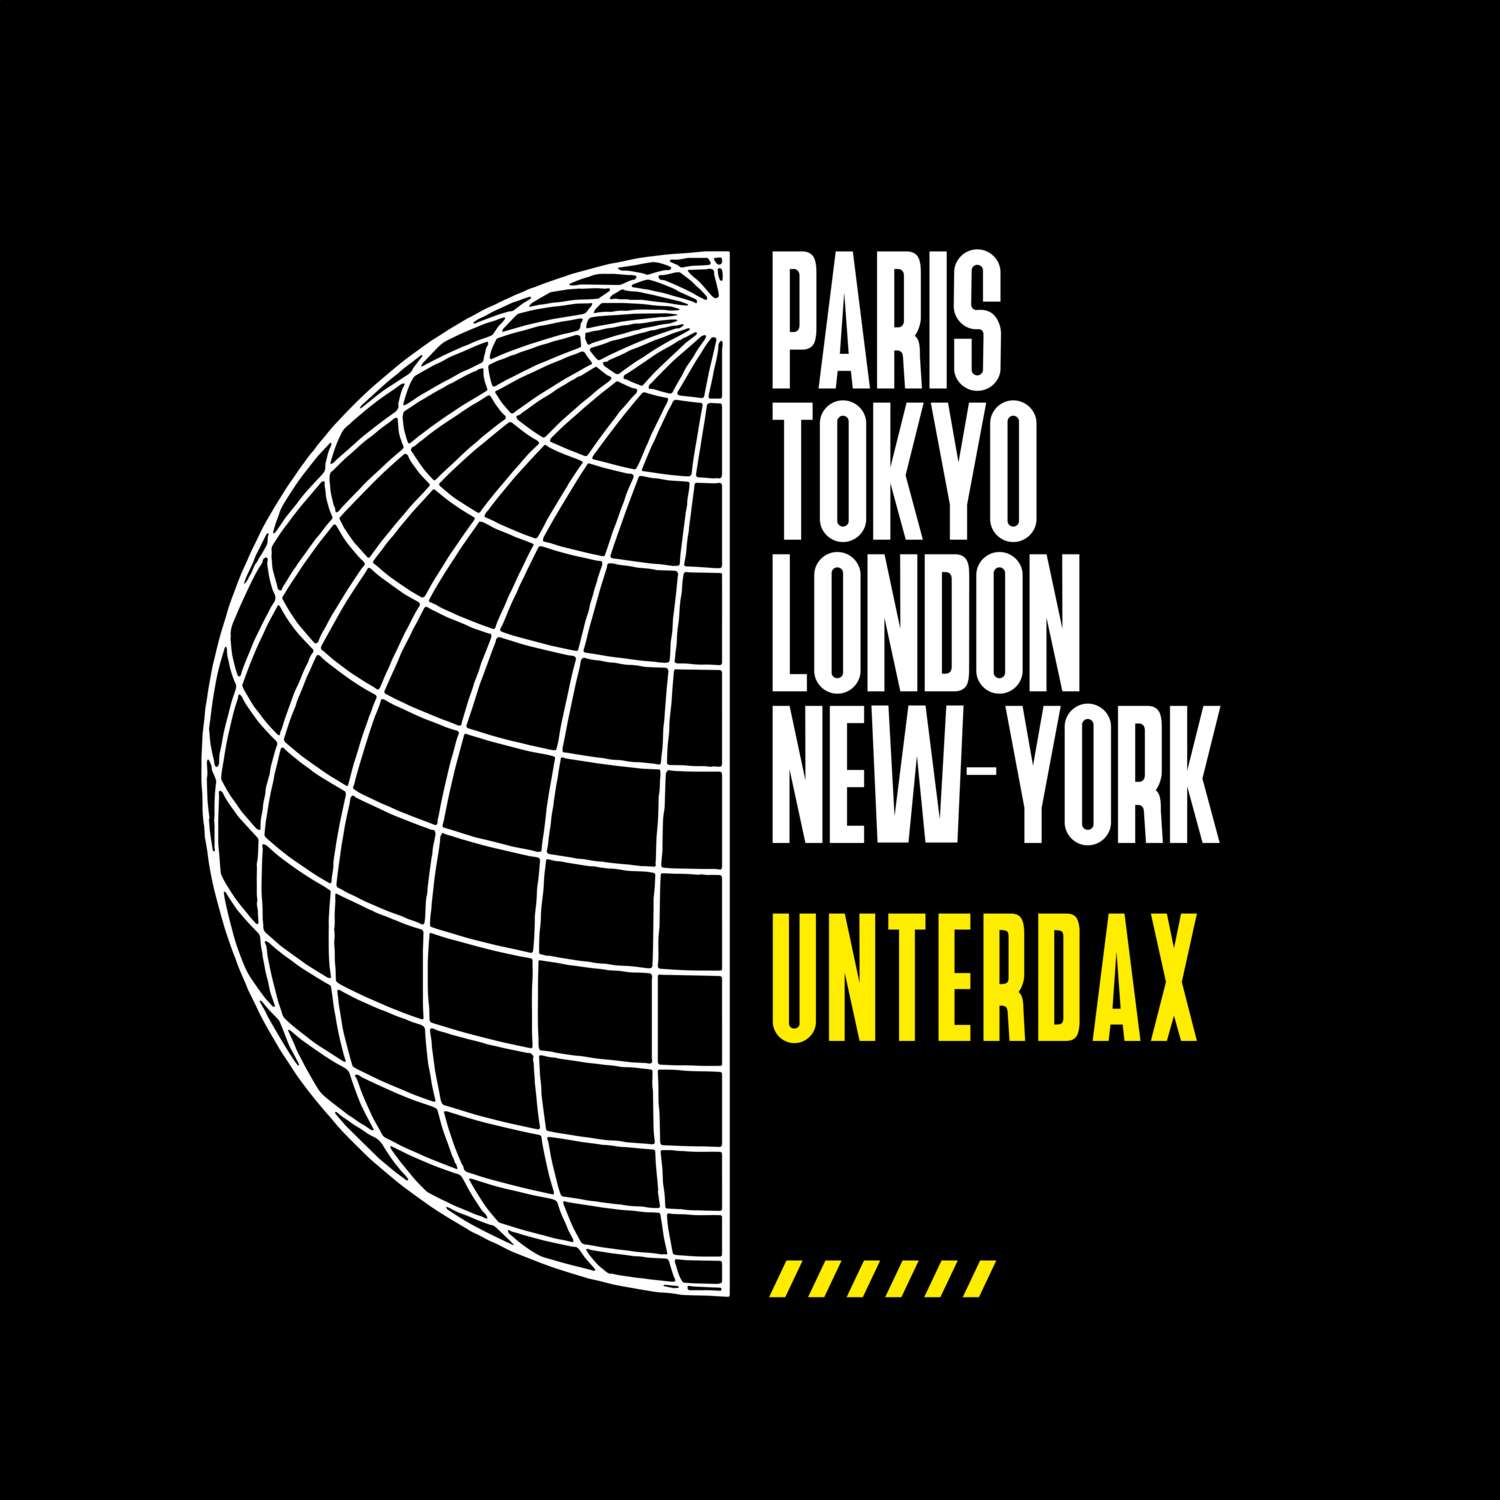 Unterdax T-Shirt »Paris Tokyo London«